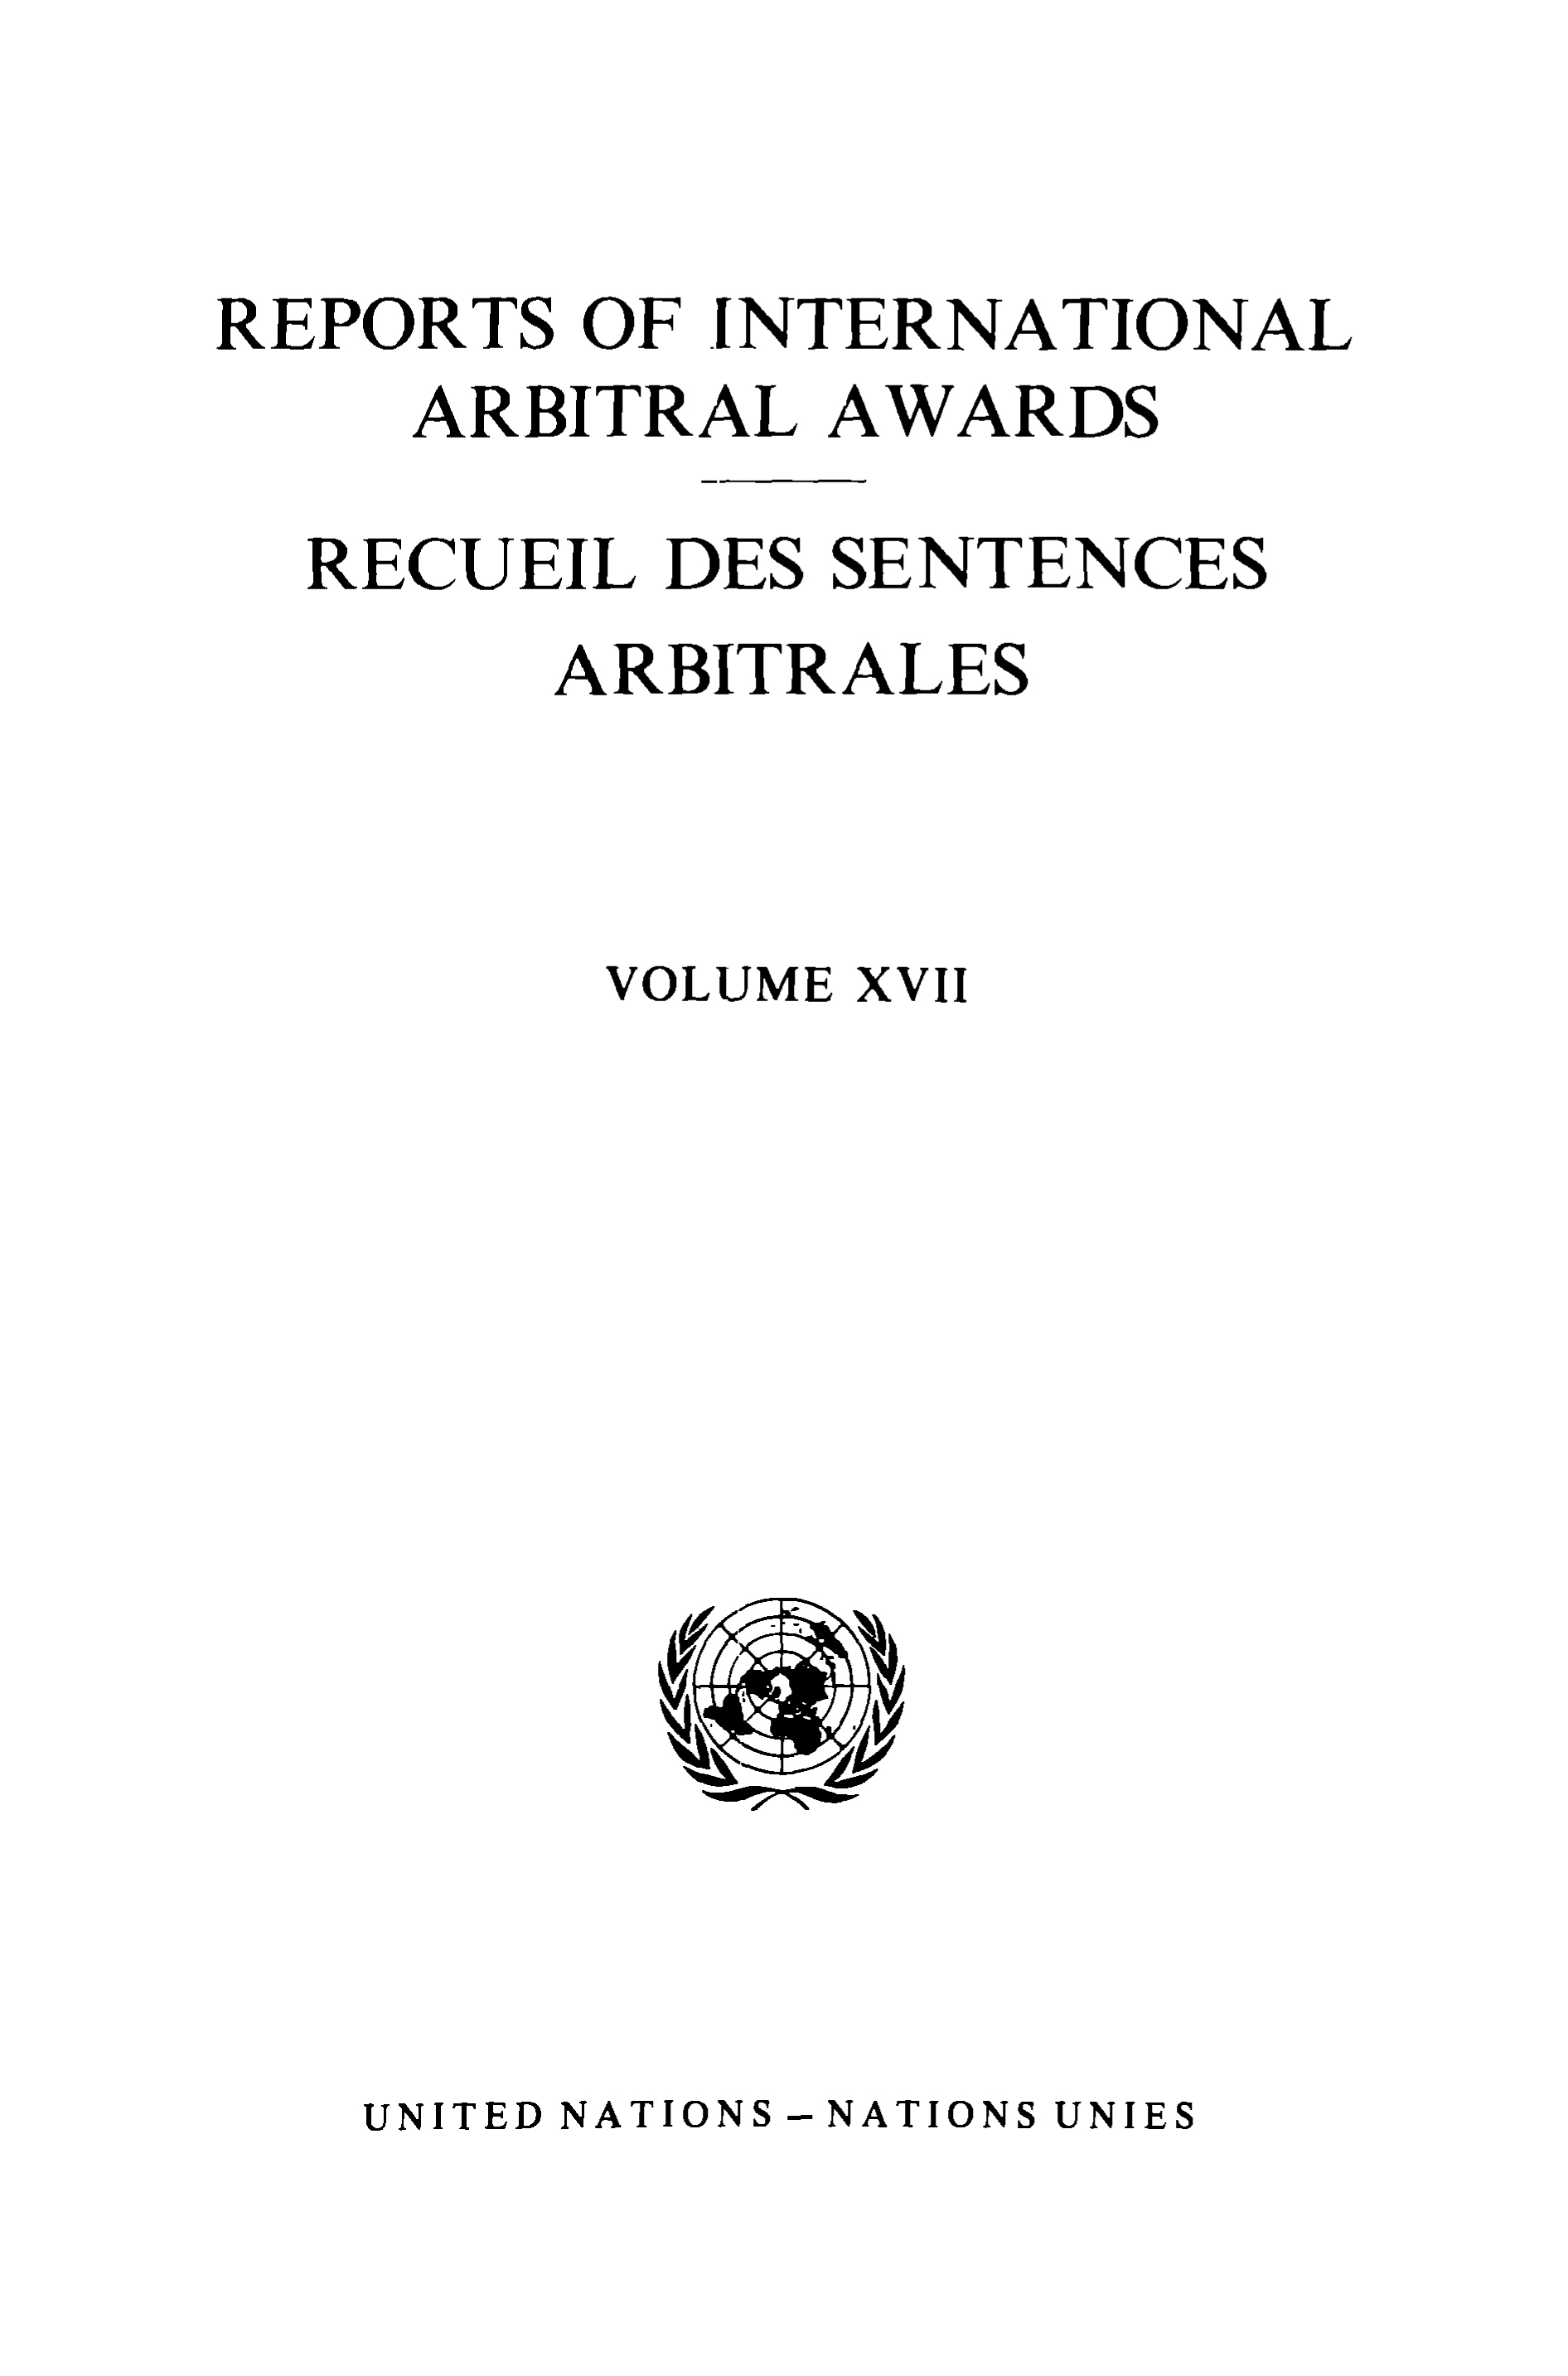 image of Reports of International Arbitral Awards, Vol. XVII